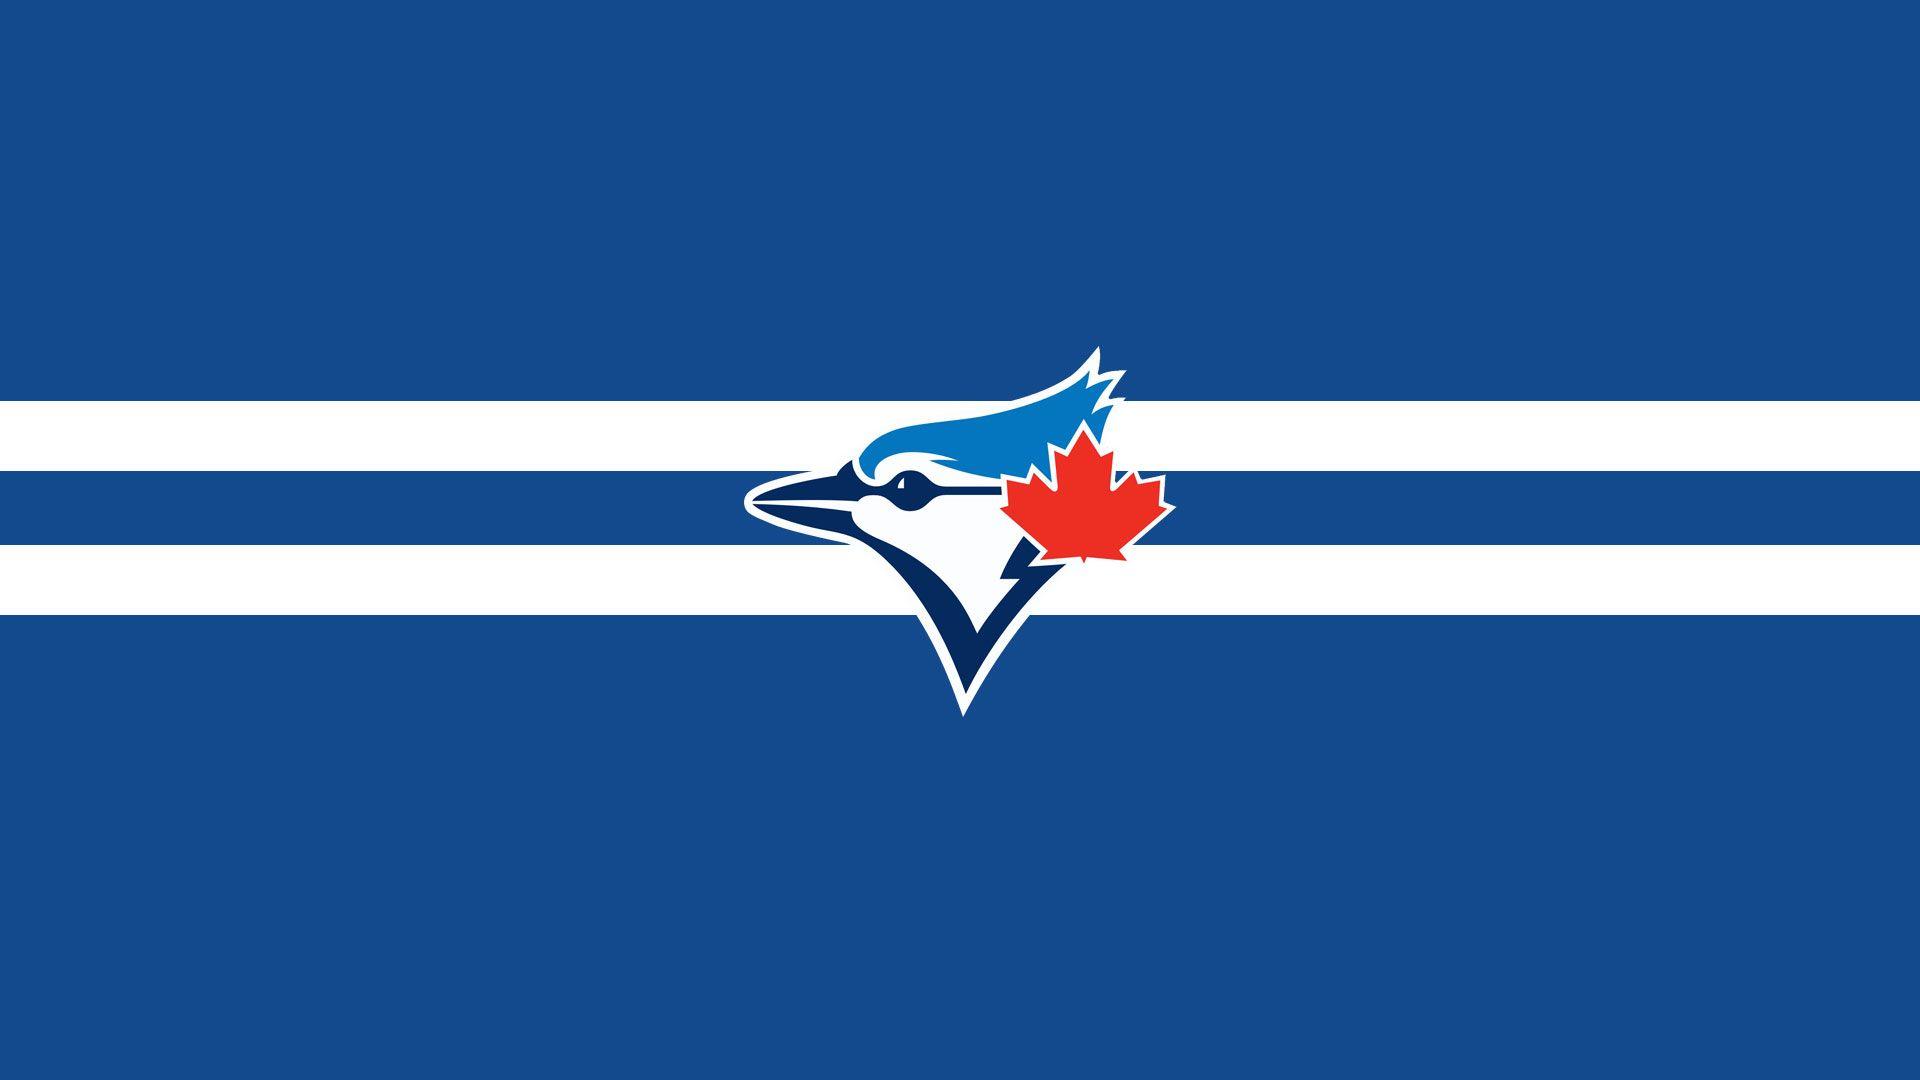 Toronto Blue Jays Logo Desktop Wallpaper 51373 1920x1080 px